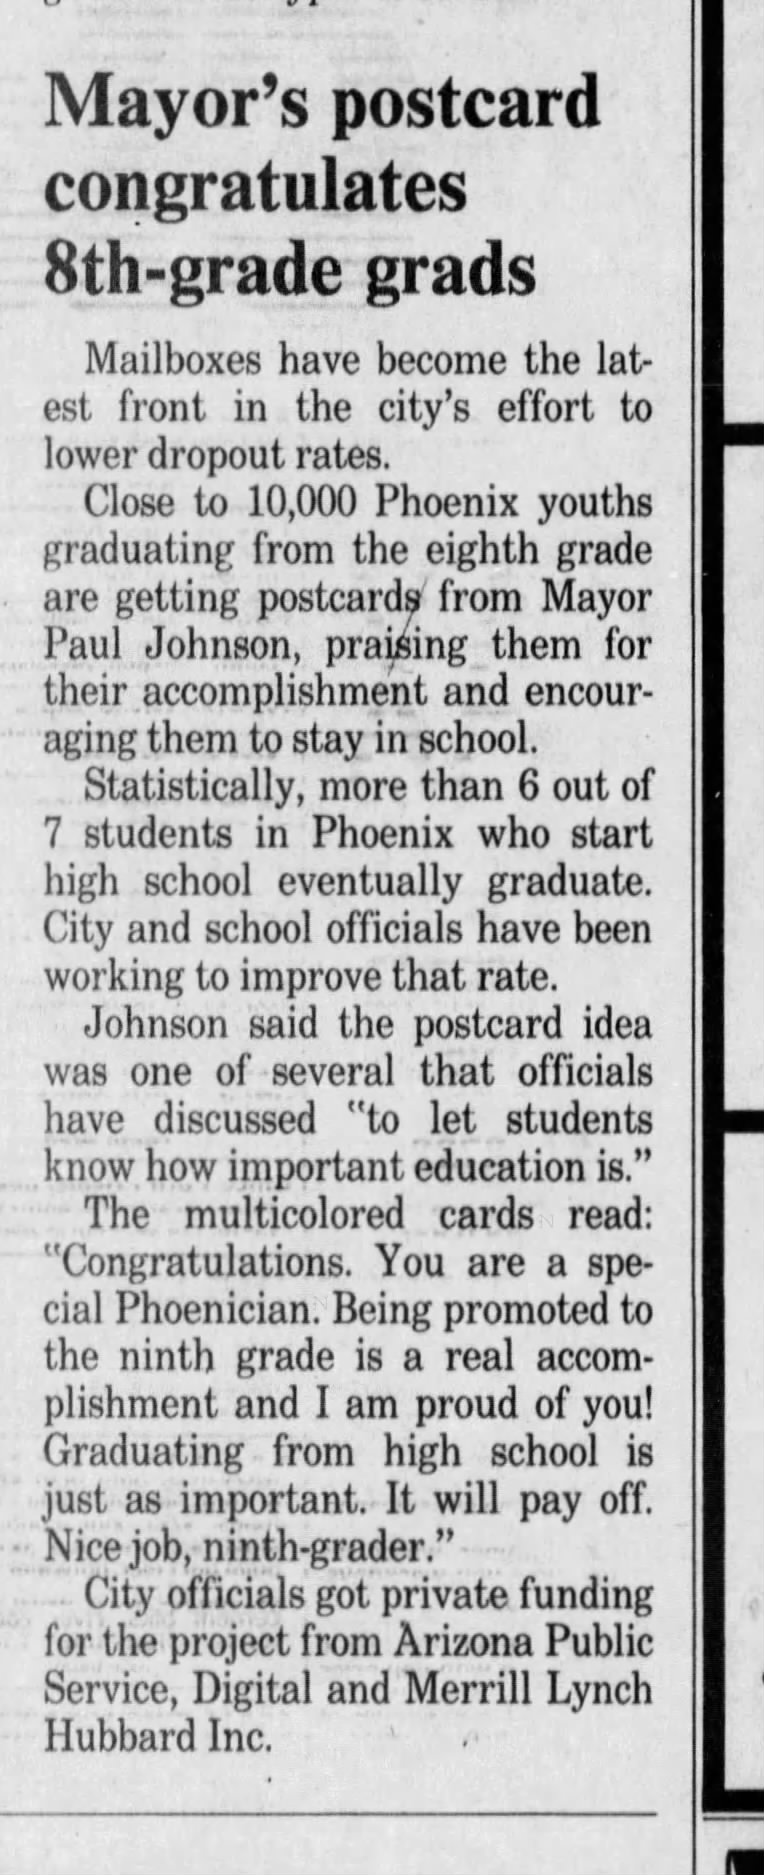 "Mayor's postcard congratulatons 8th-grade grads" (Jun 11, 1990)